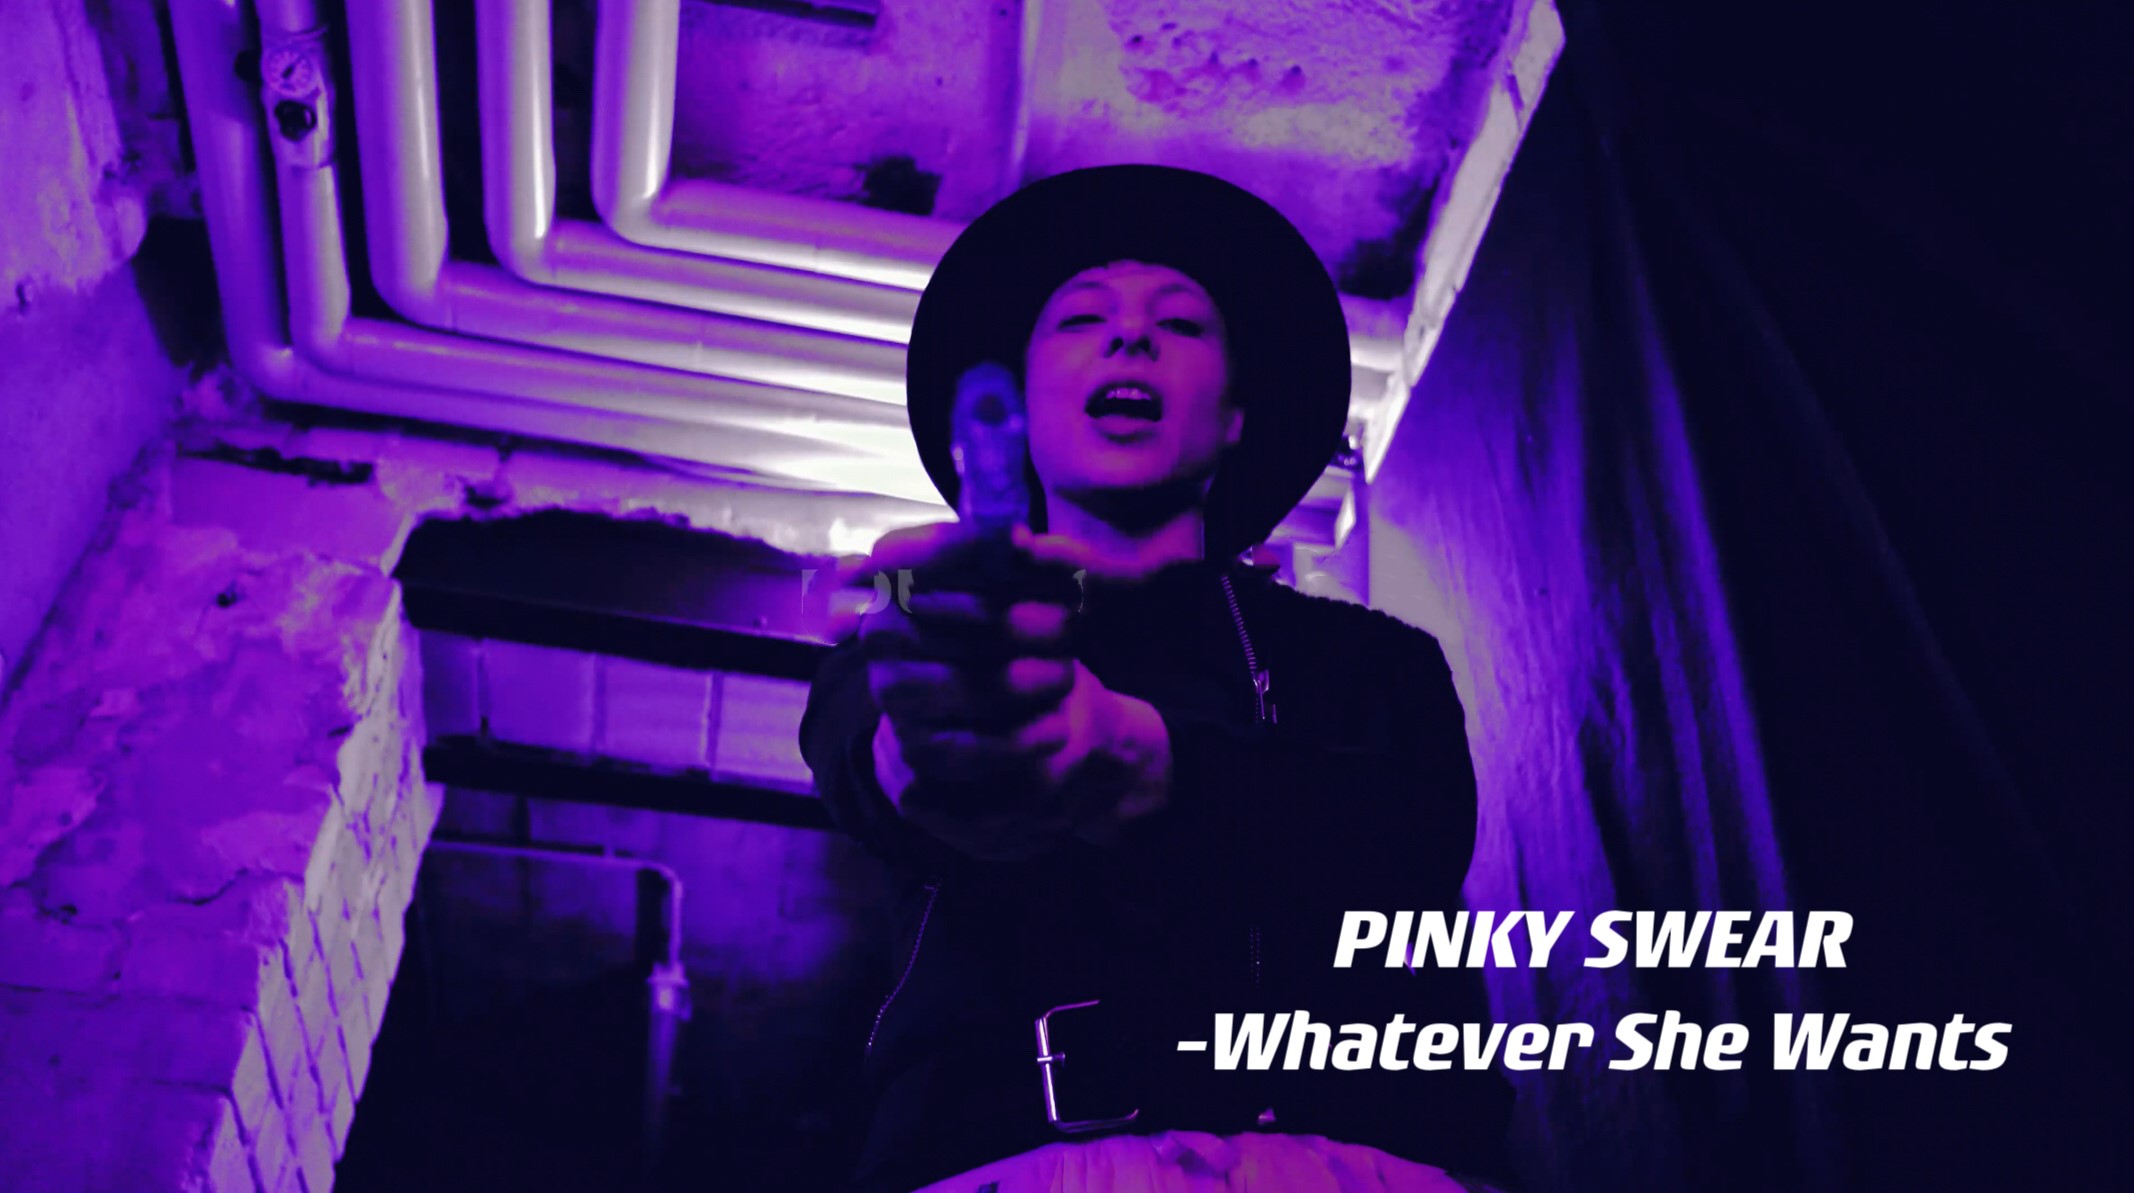 PINKY SWEAR - Whatever She Wants